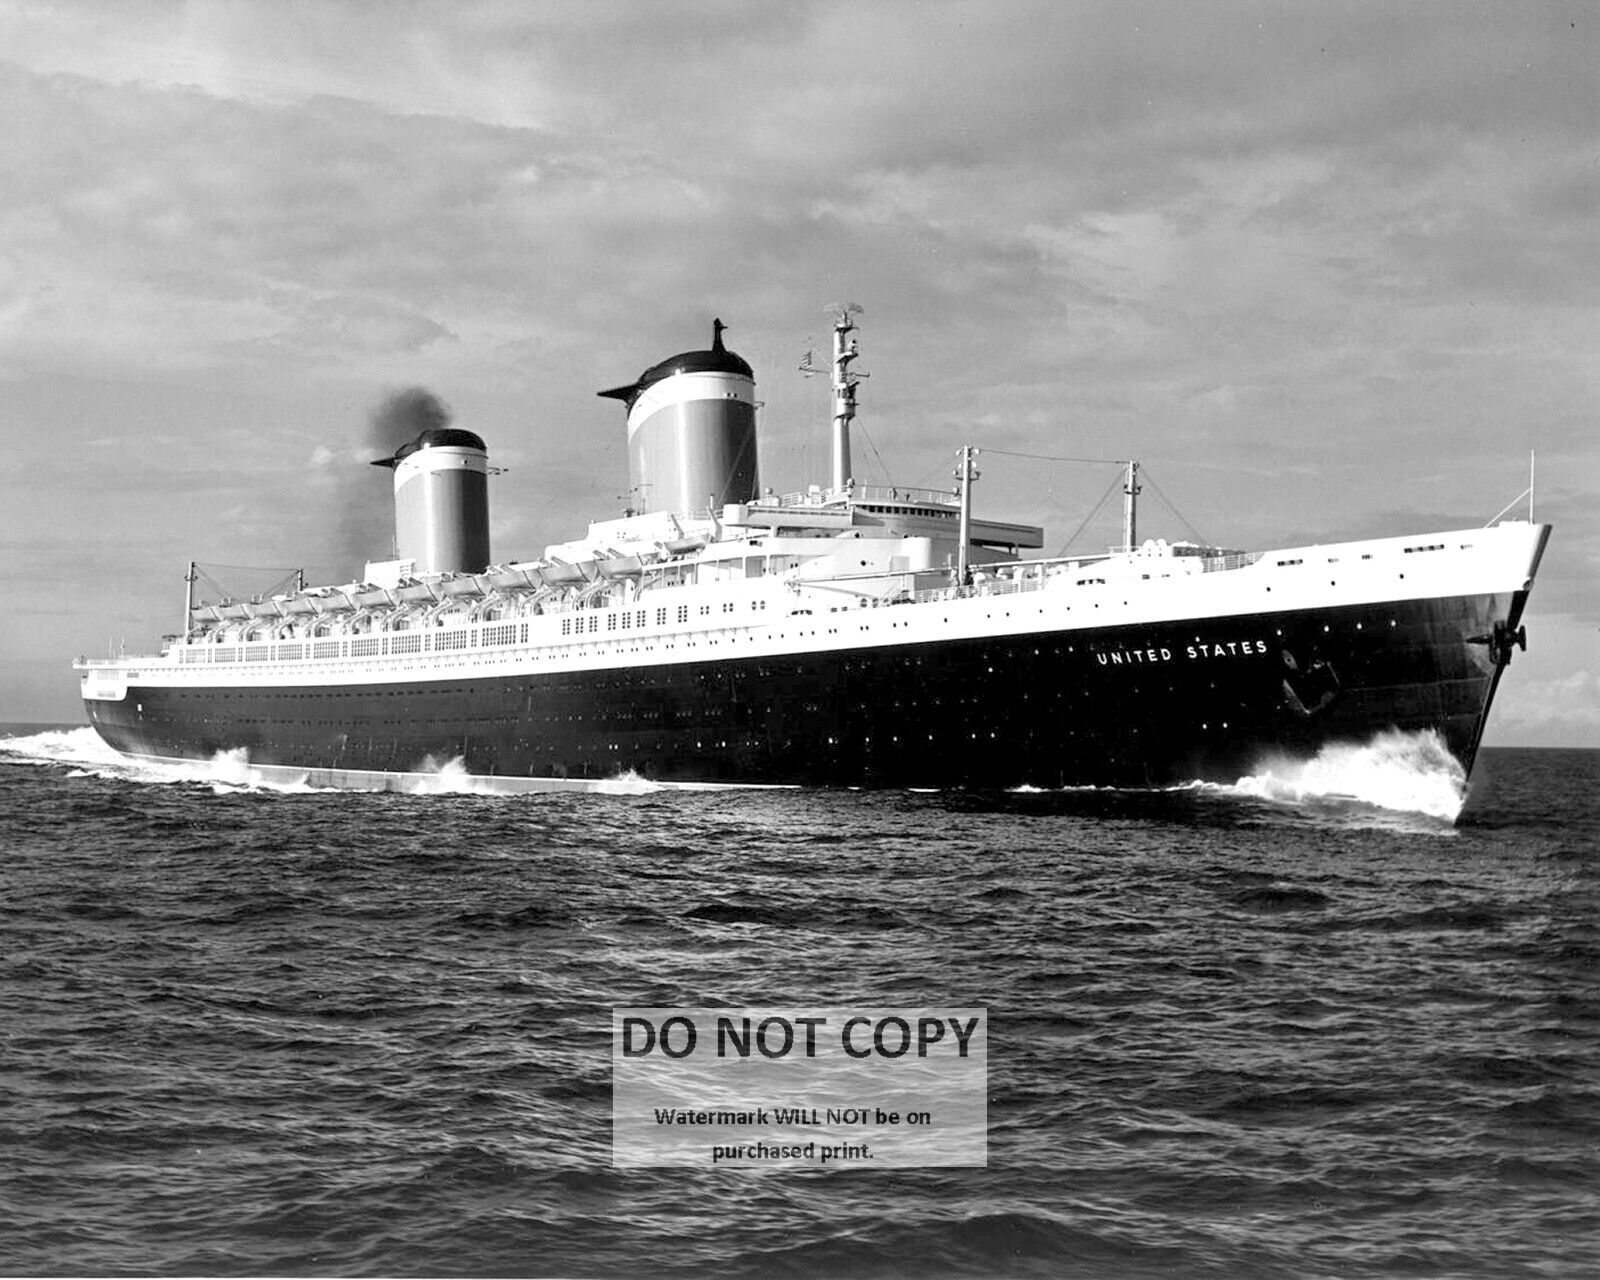 SS UNITED STATES LUXURY PASSENGER LINER - 8X10 PHOTO (FB-808)